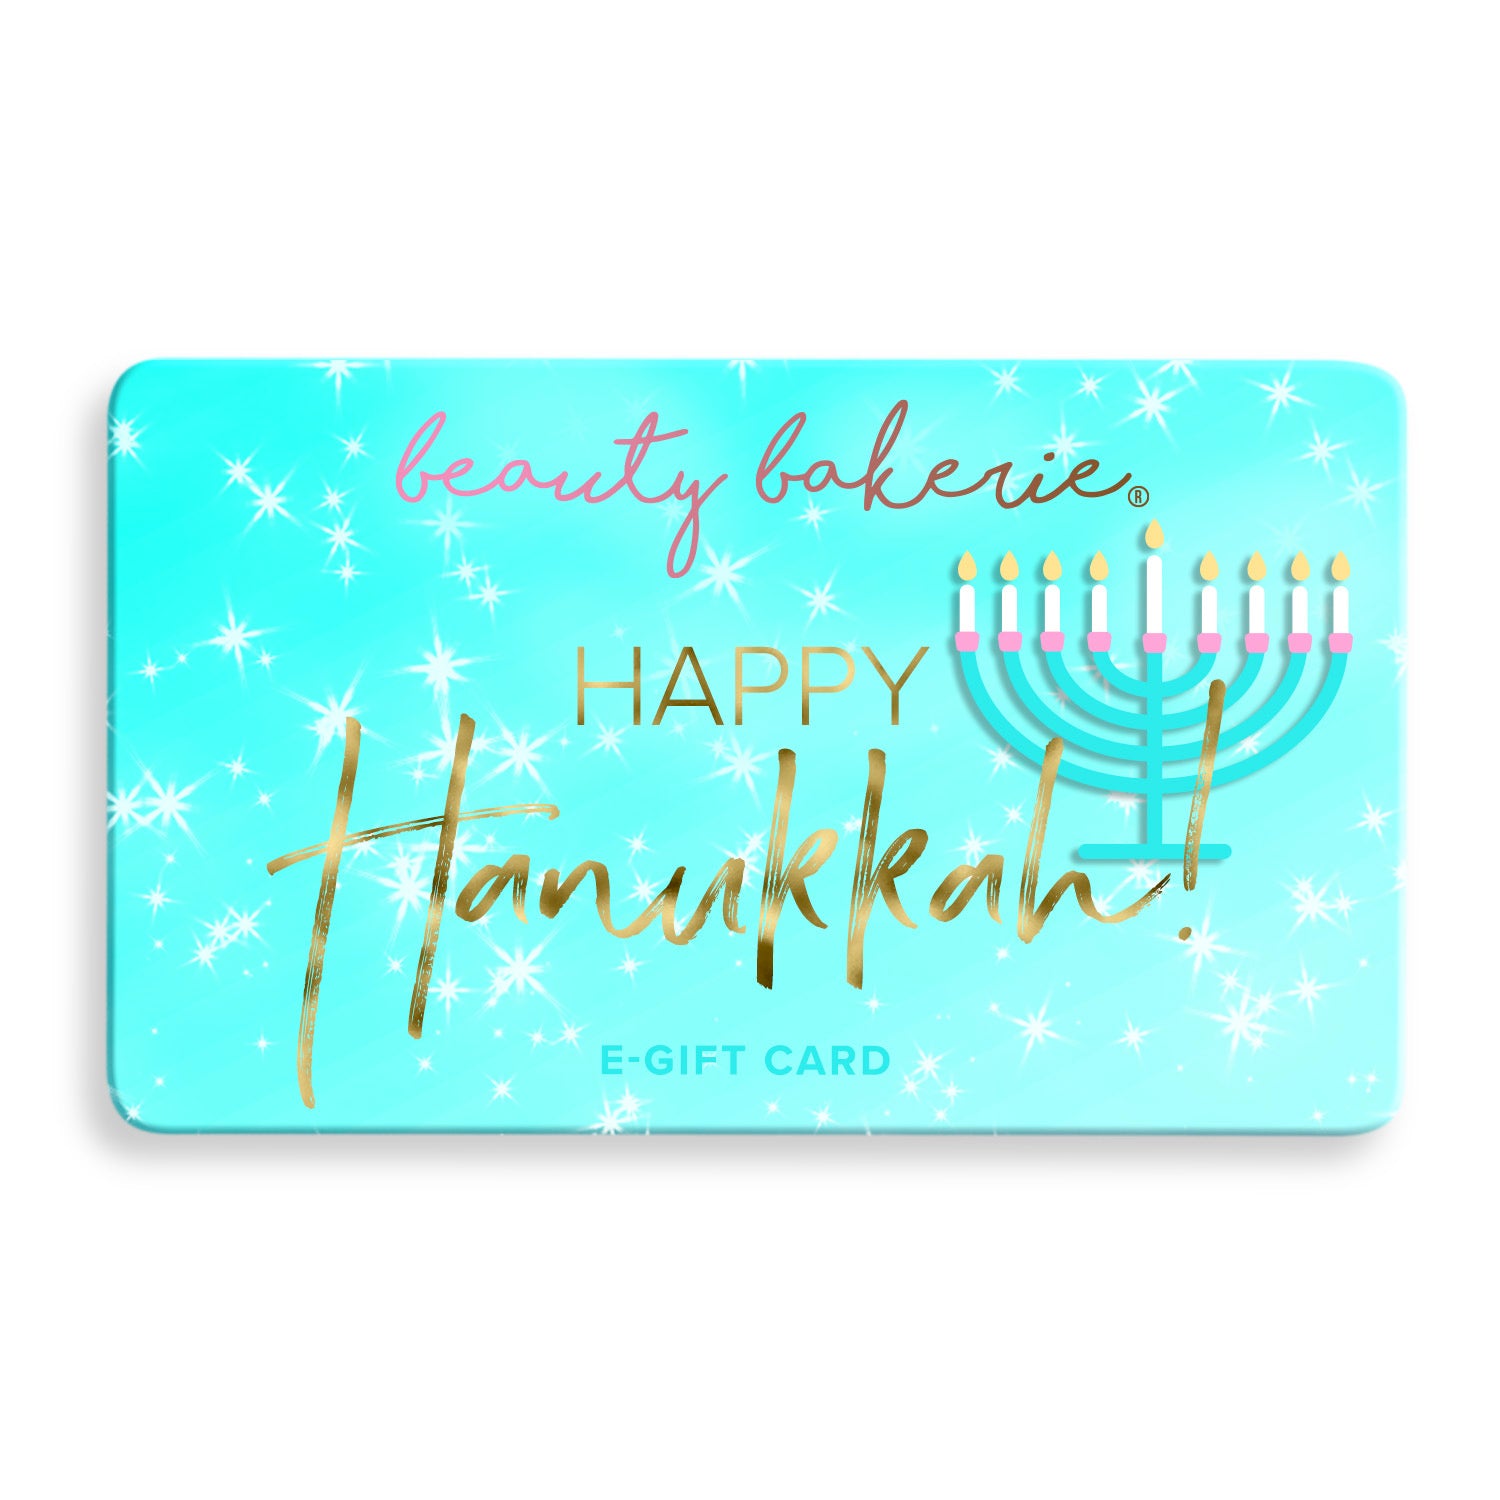 Happy Hanukkah eGift Card